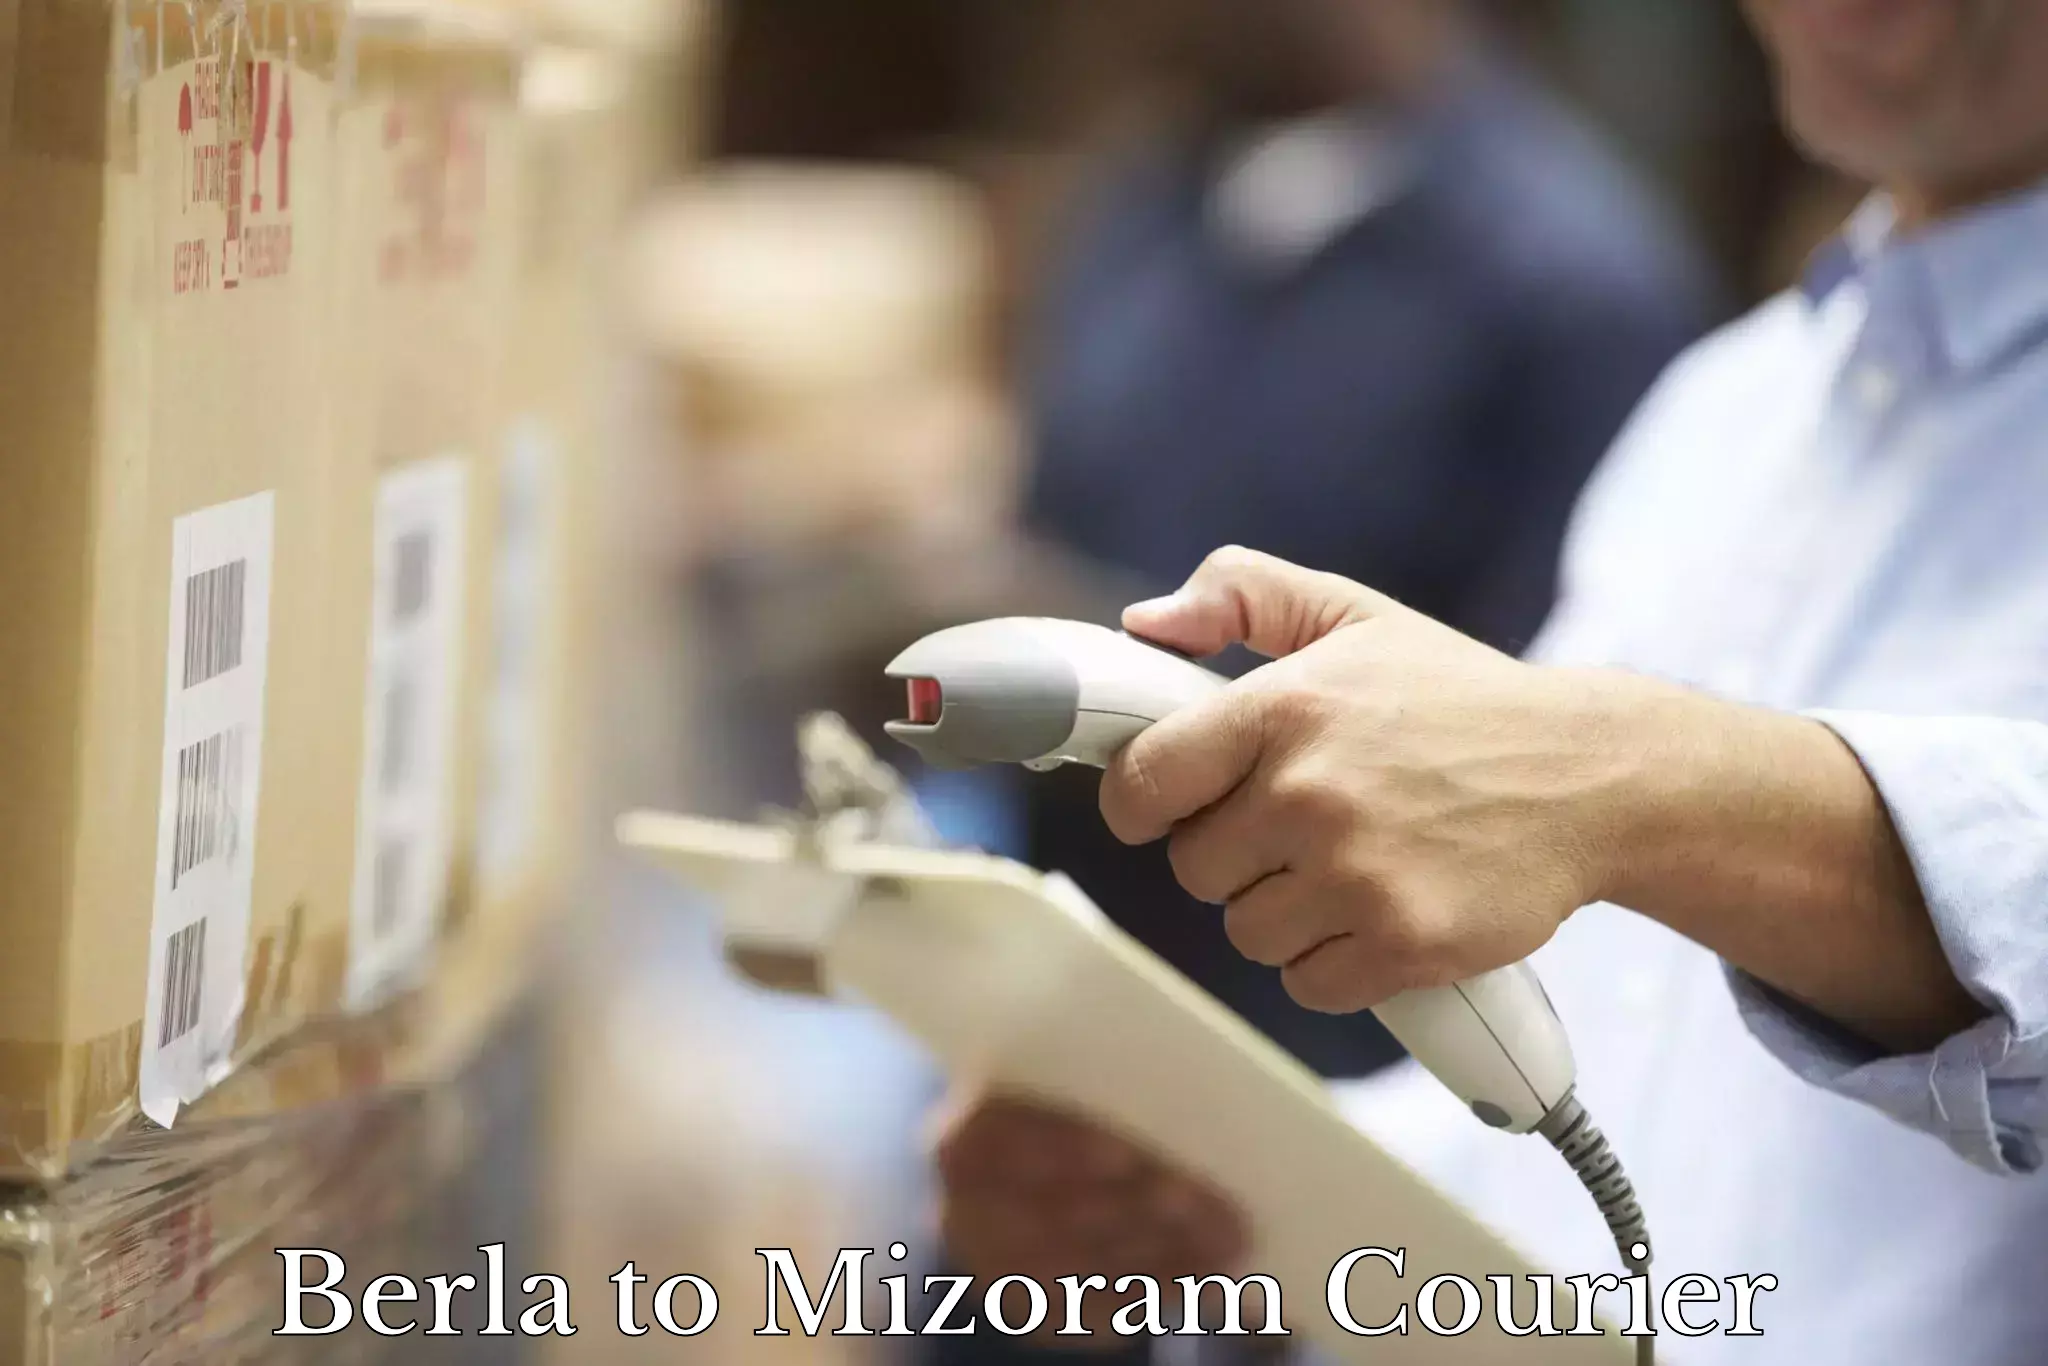 Courier service partnerships Berla to Mizoram